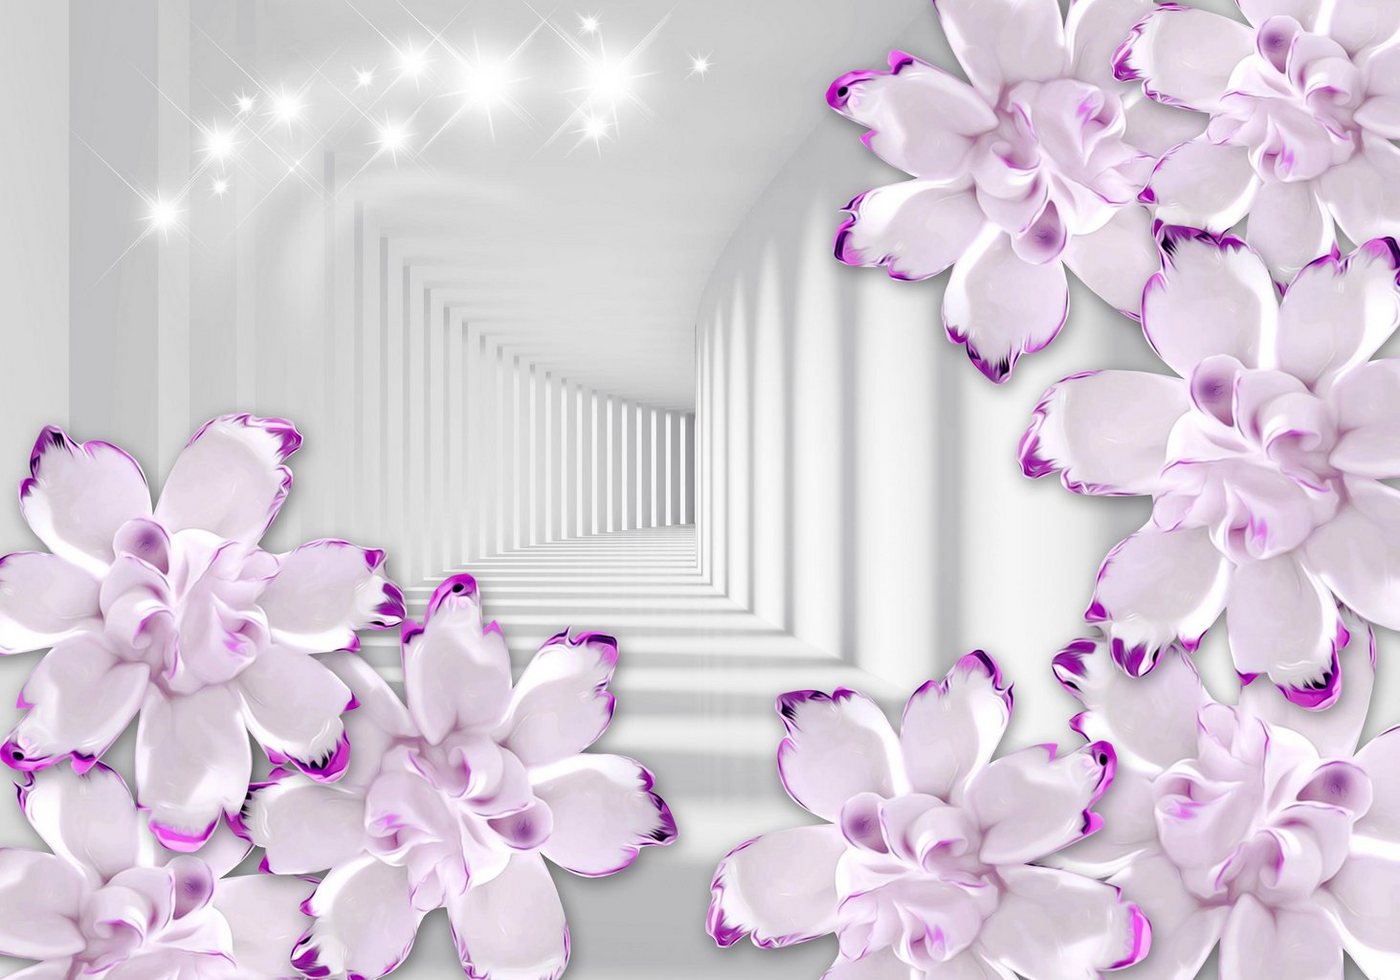 wandmotiv24 Fototapete Tunnel Blumen Violett, strukturiert, Wandtapete, Motivtapete, matt, Vinyltapete, selbstklebend von wandmotiv24